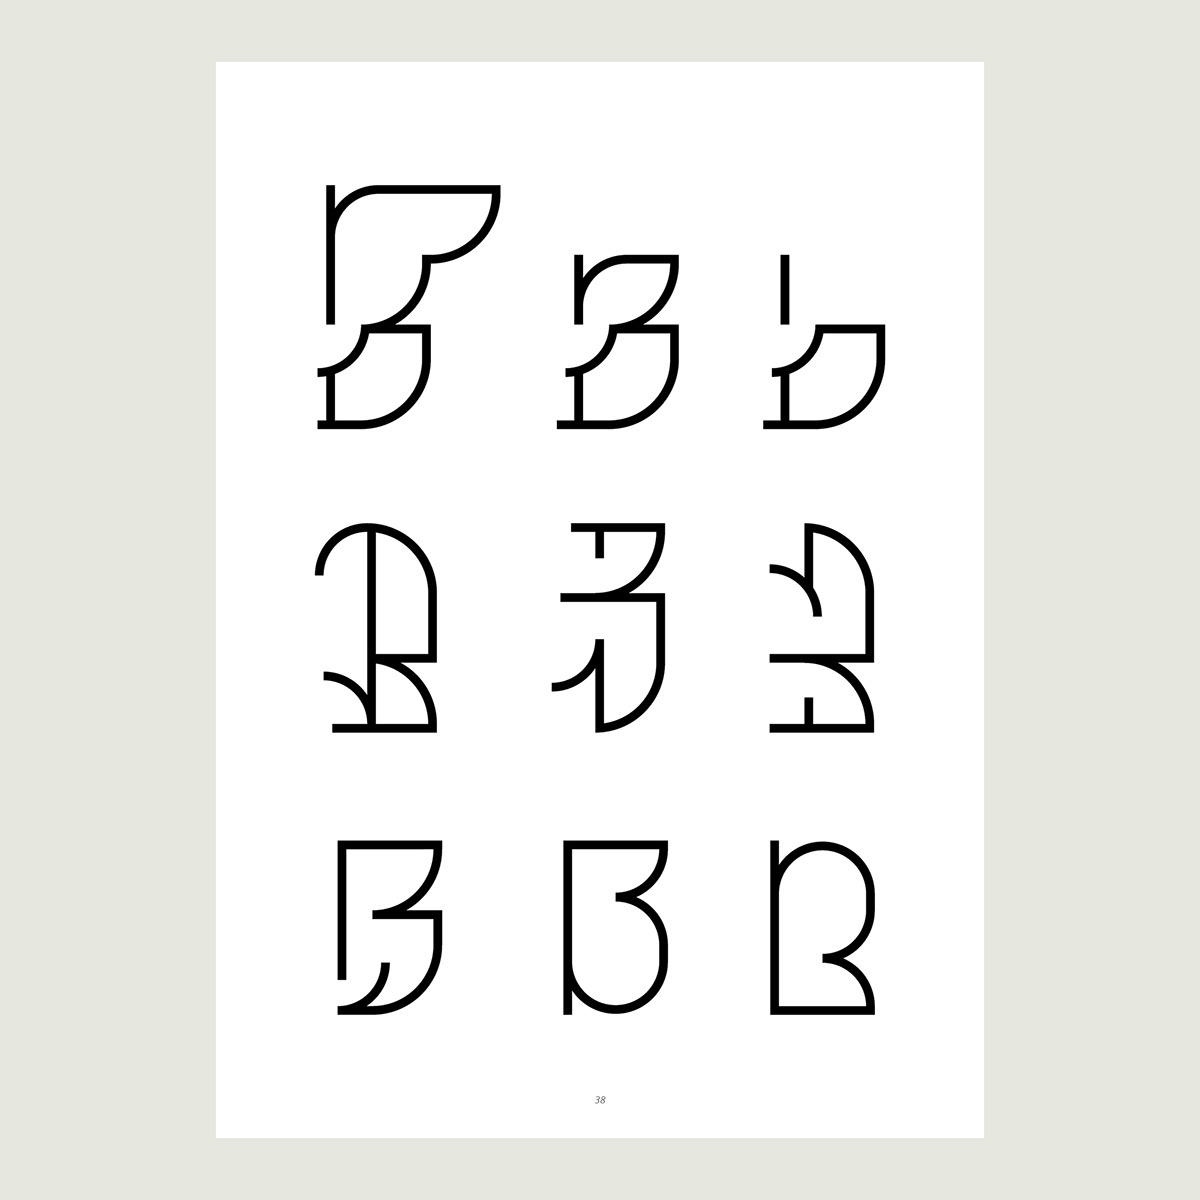 Hubert pasieczny hubert pasieczny type Typo Poster letters alphabet